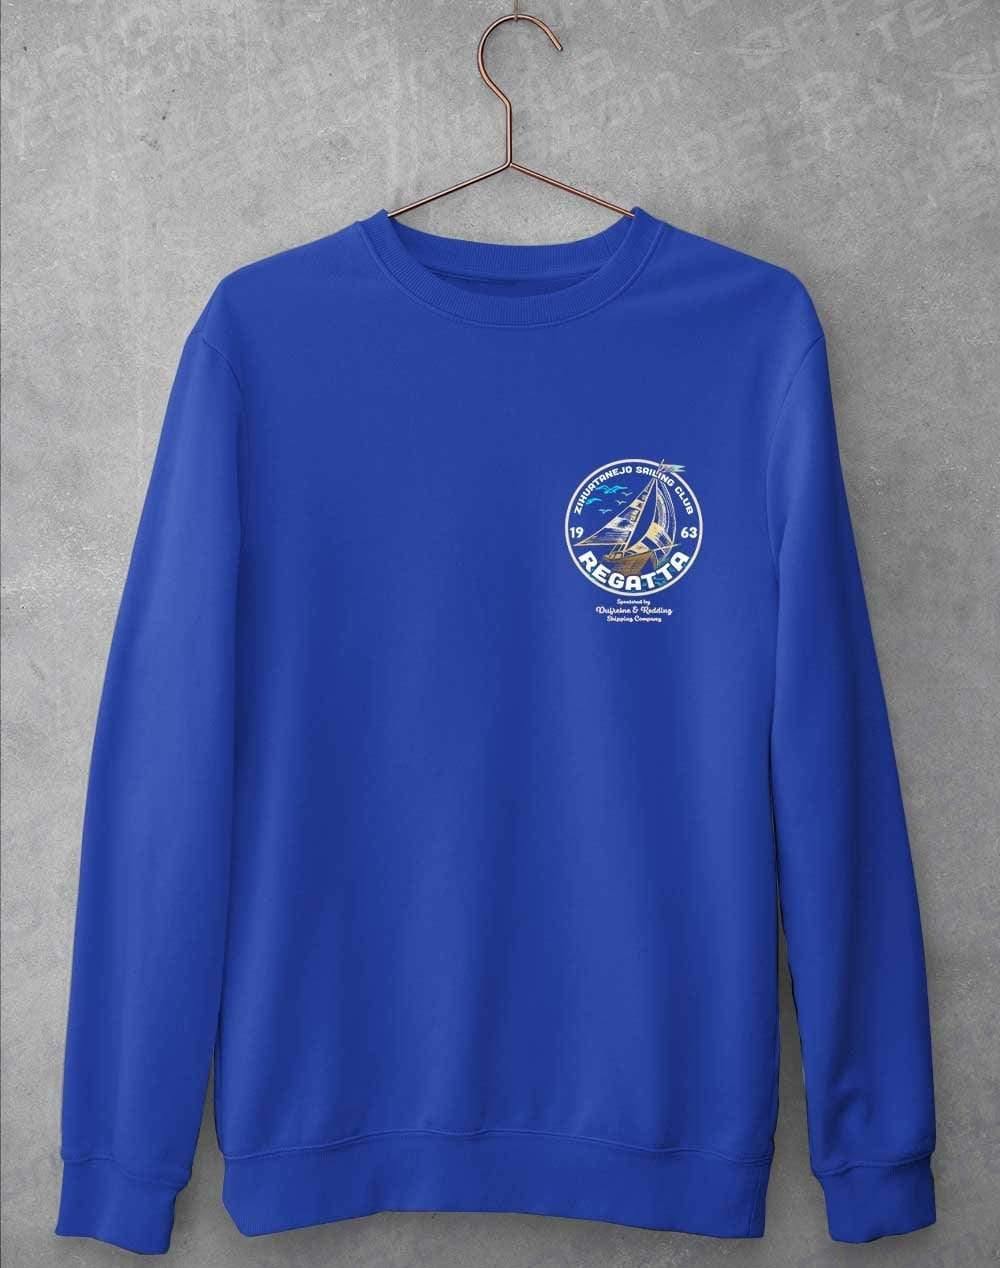 Zihuatanejo Sailing Regatta 1963 Sweatshirt S / Royal Blue  - Off World Tees